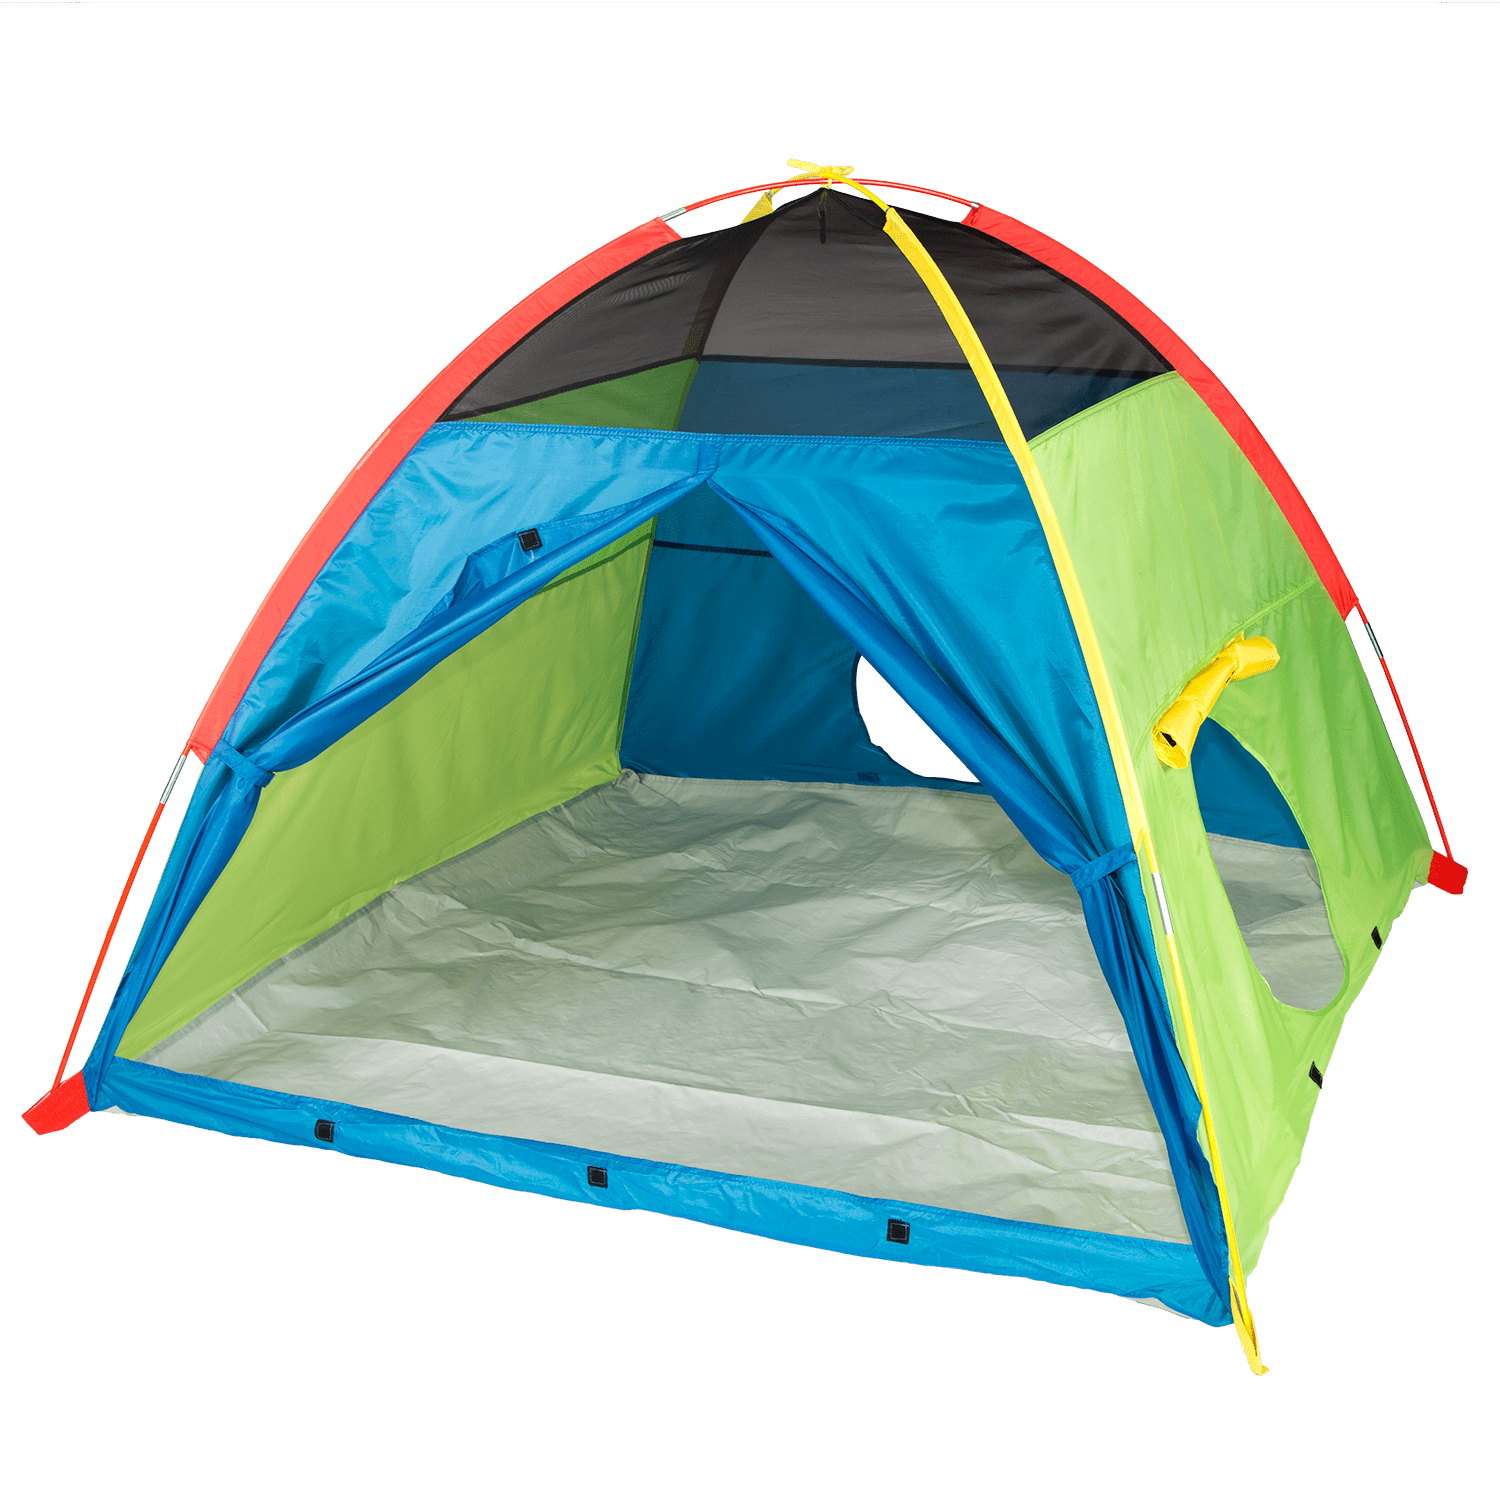 Reisen Wandern Zelt,Camping Zelt,3-4 Person Pop Up Dome Tent,Super GroßEs Regenwetterzelt,Doppelhexagonal Zelt,Leicht Zusammenzubauen|Camping 